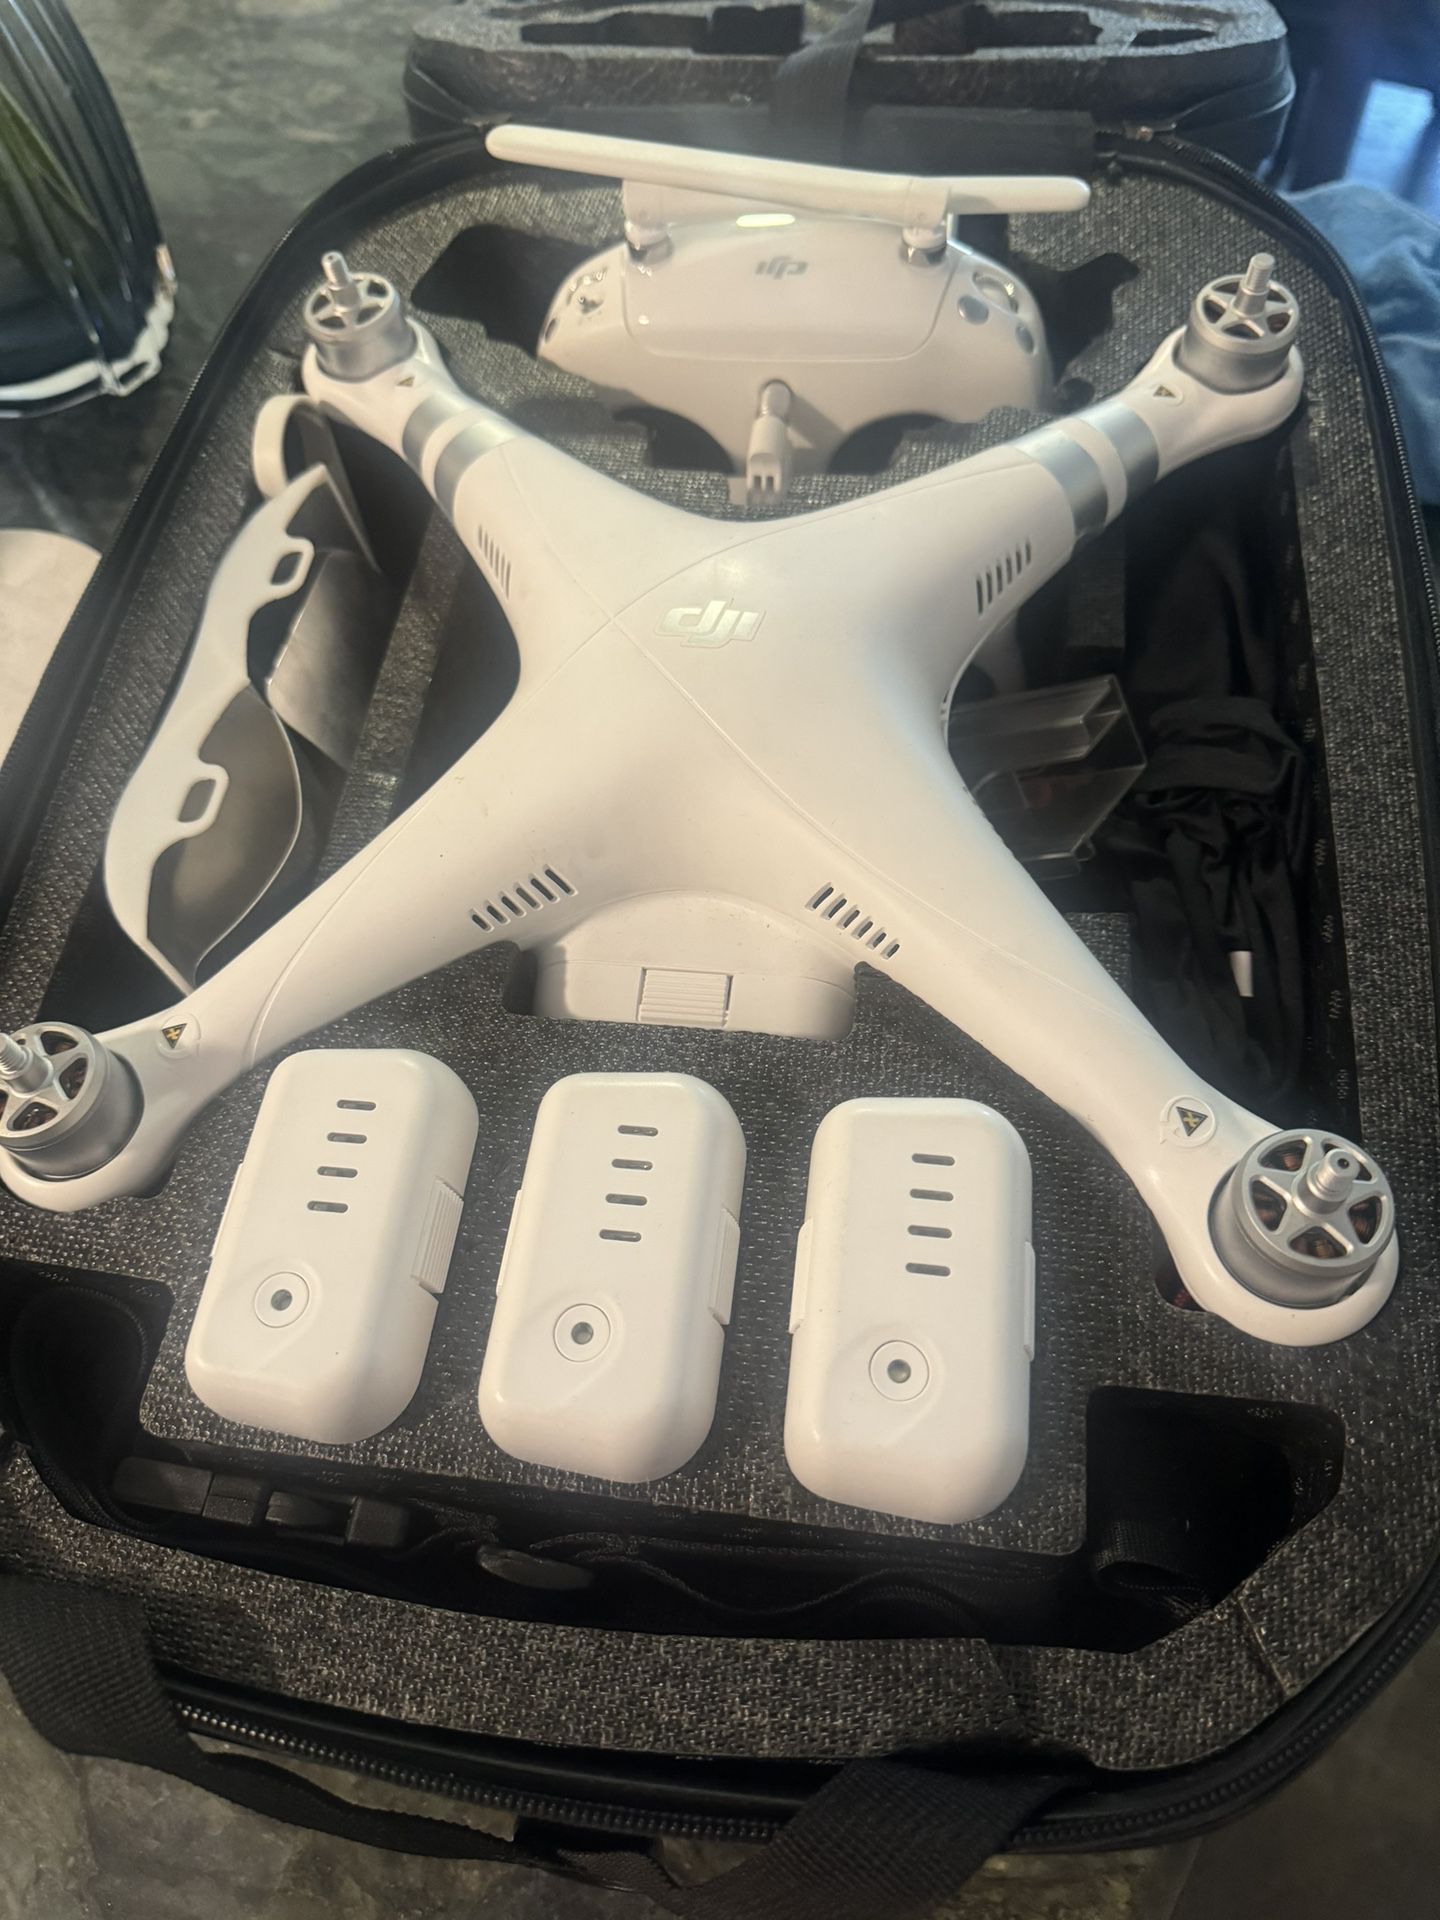 Drone DJI Phantom 3 Professional 